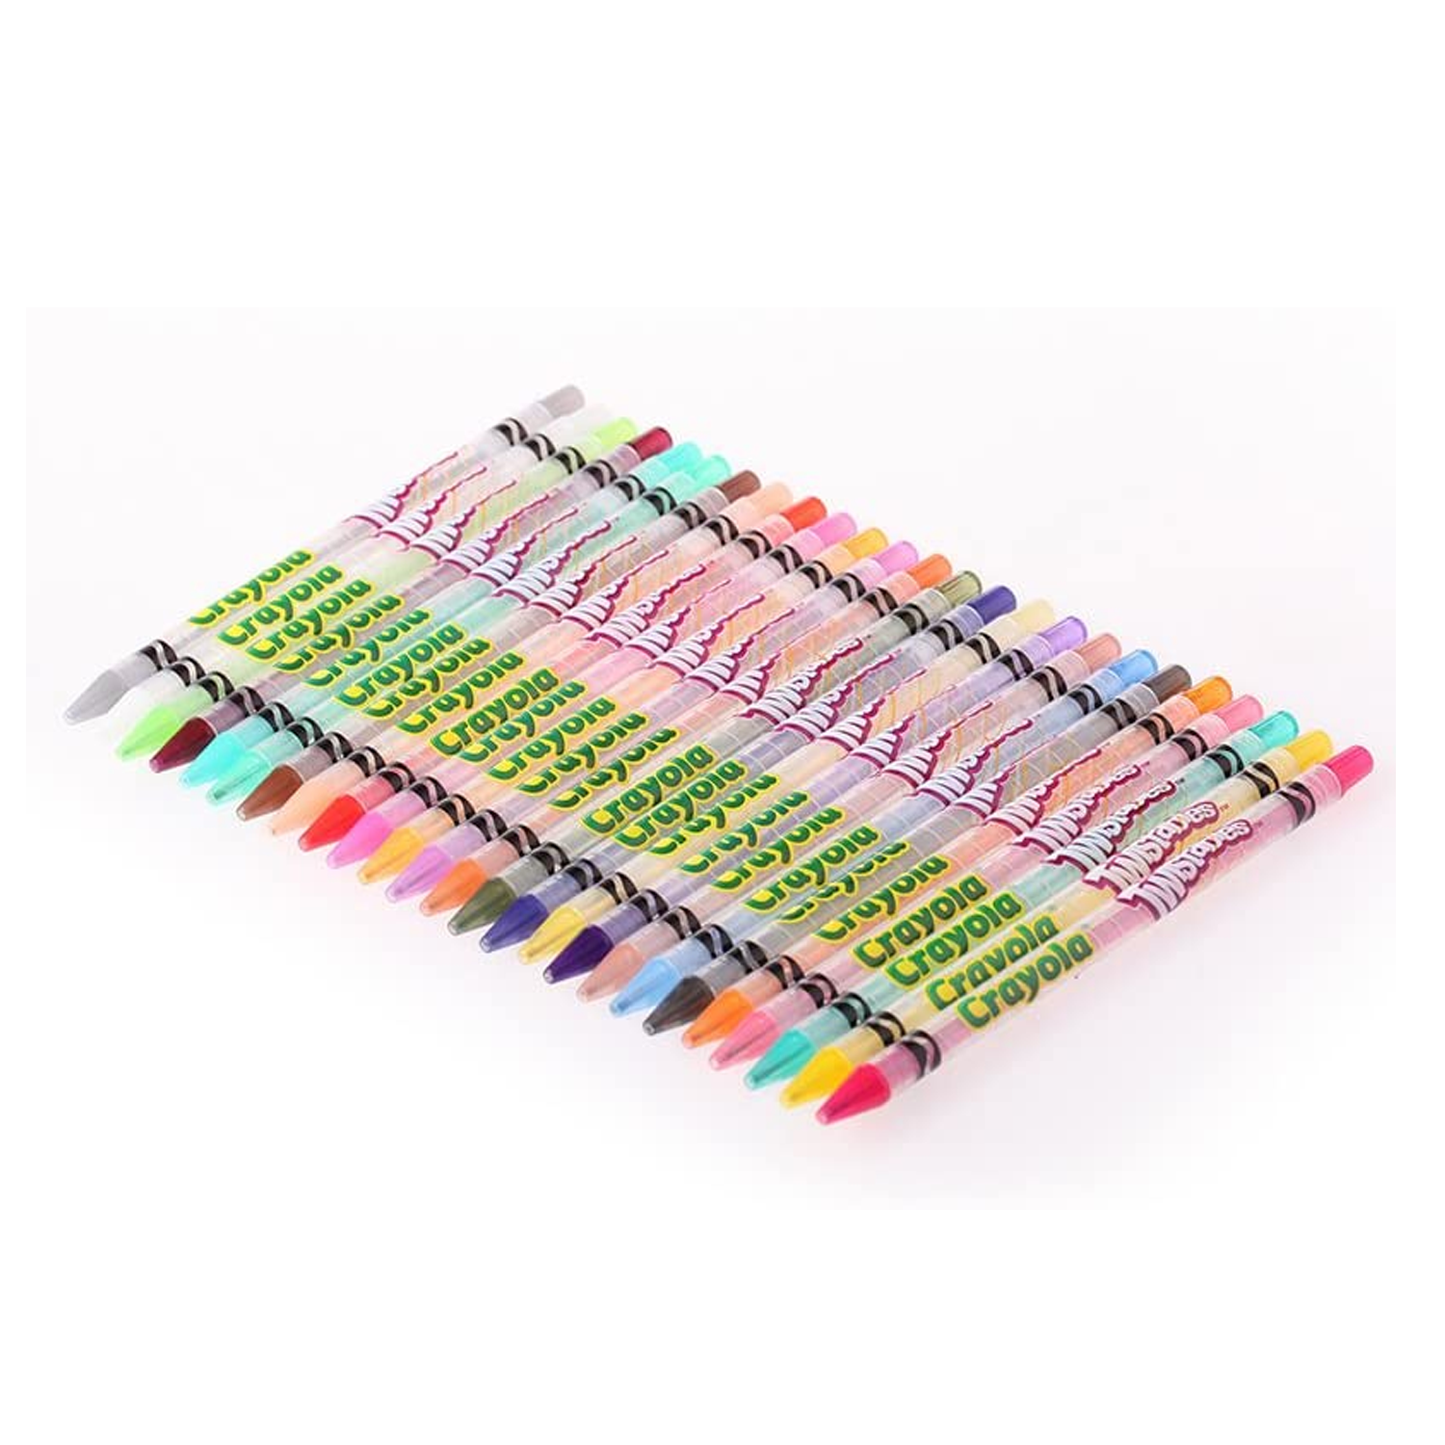 Crayola Twistable Colored Pencils Kit